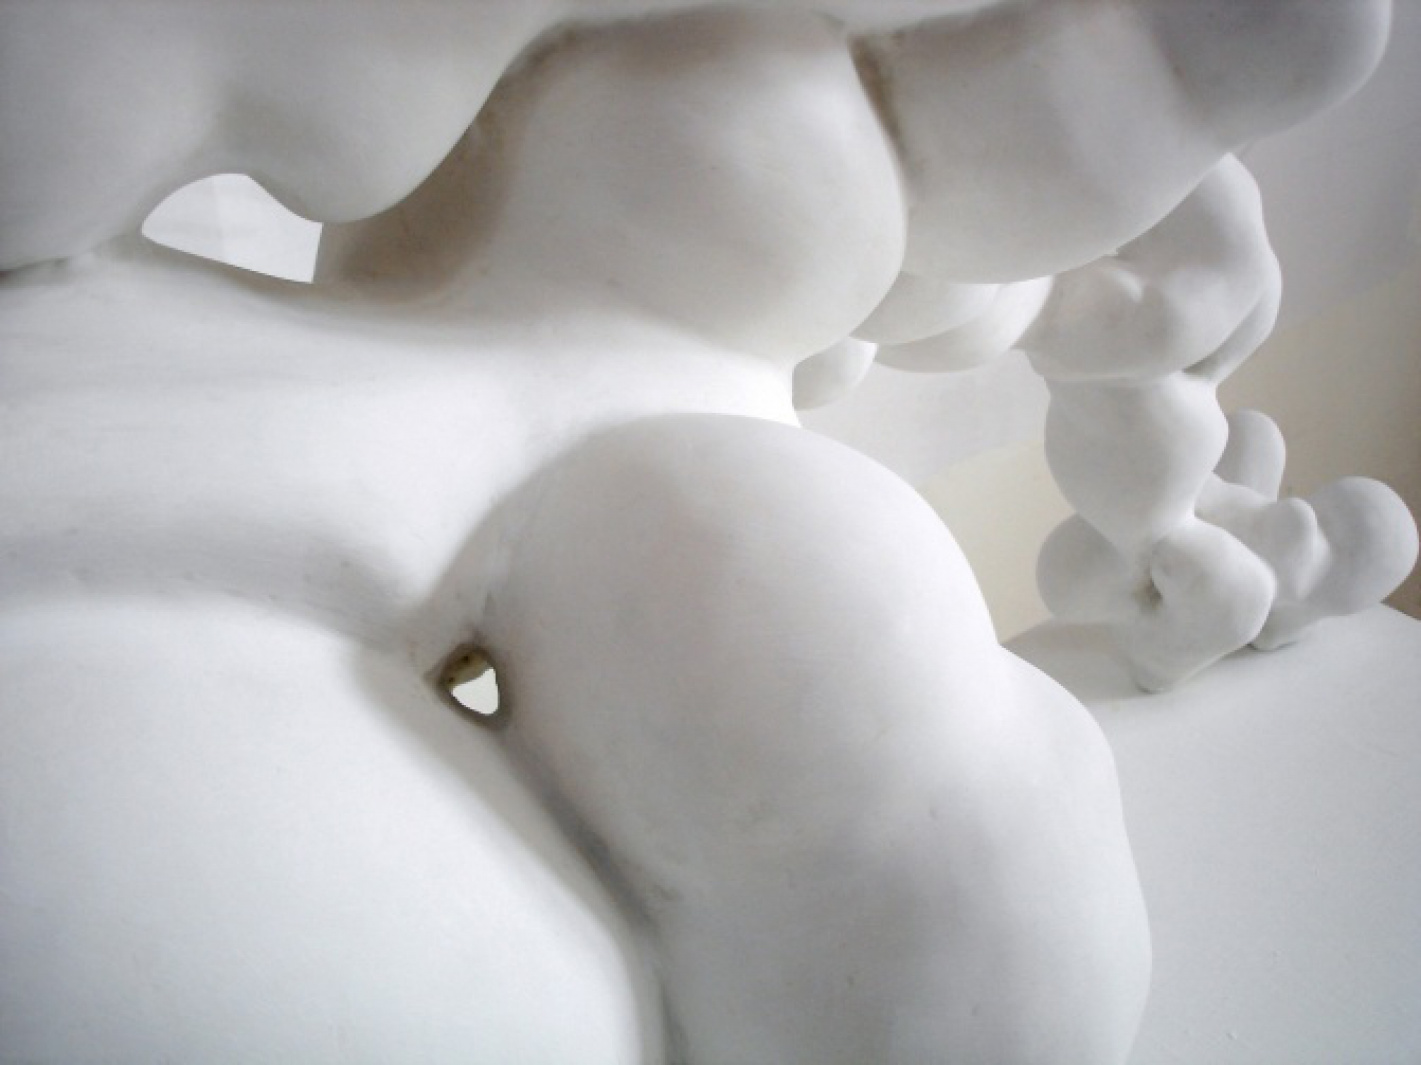 Adam Colton: The White Sculptures